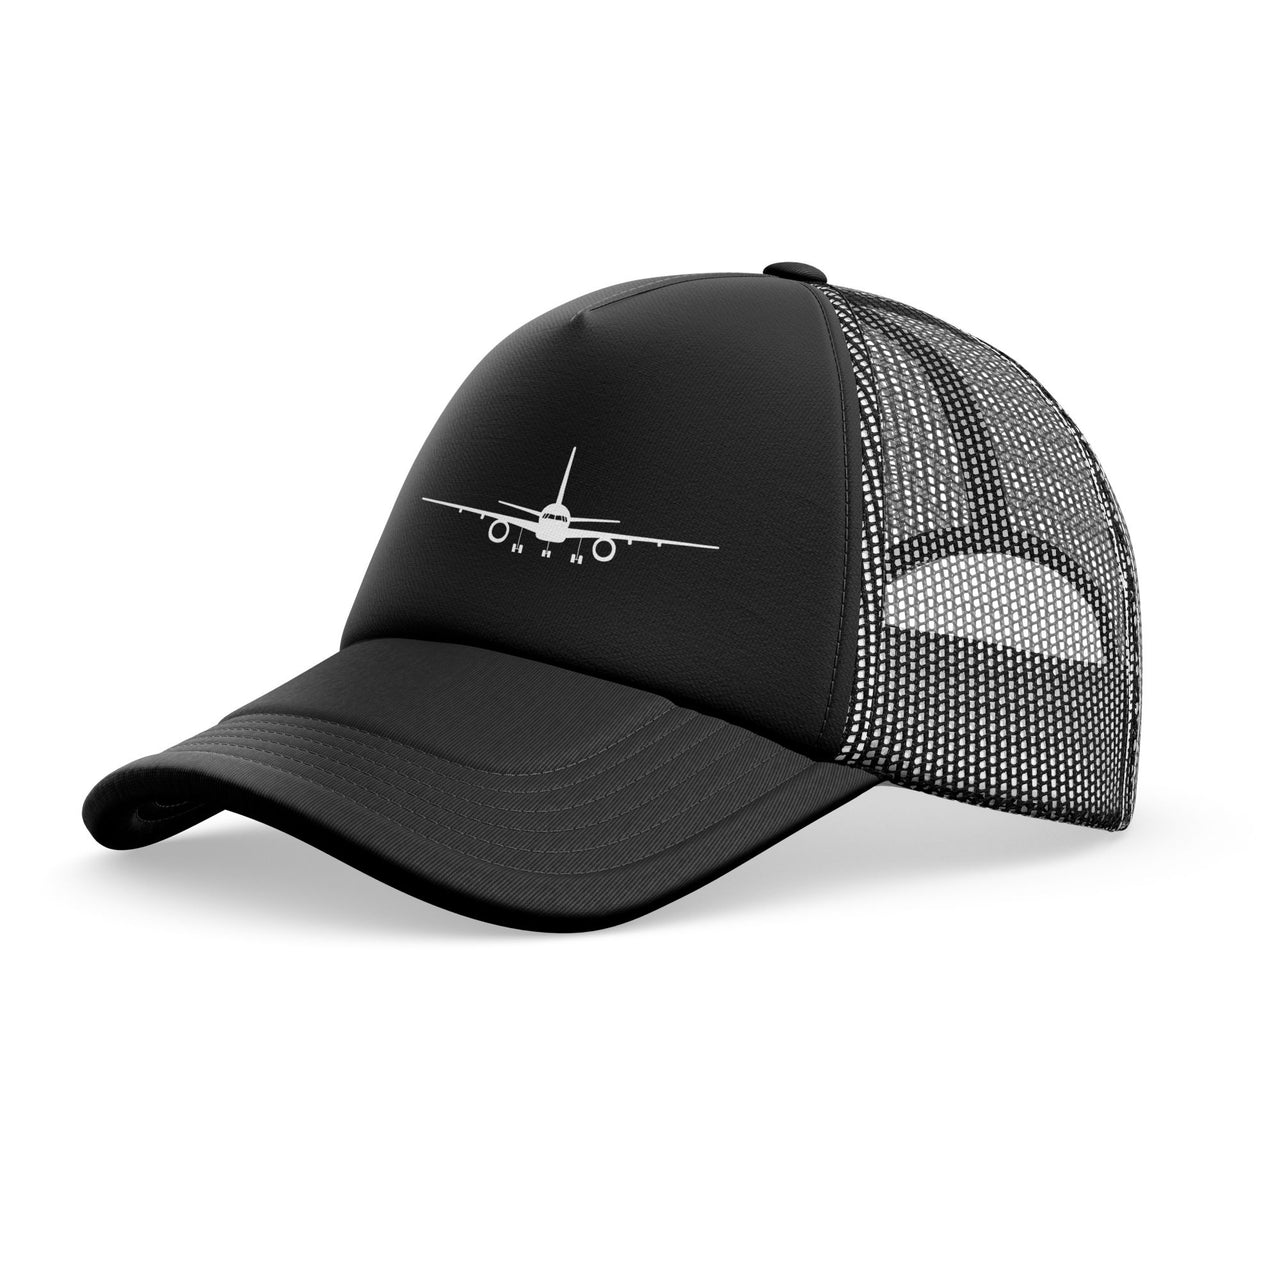 Boeing 757 Silhouette Designed Trucker Caps & Hats